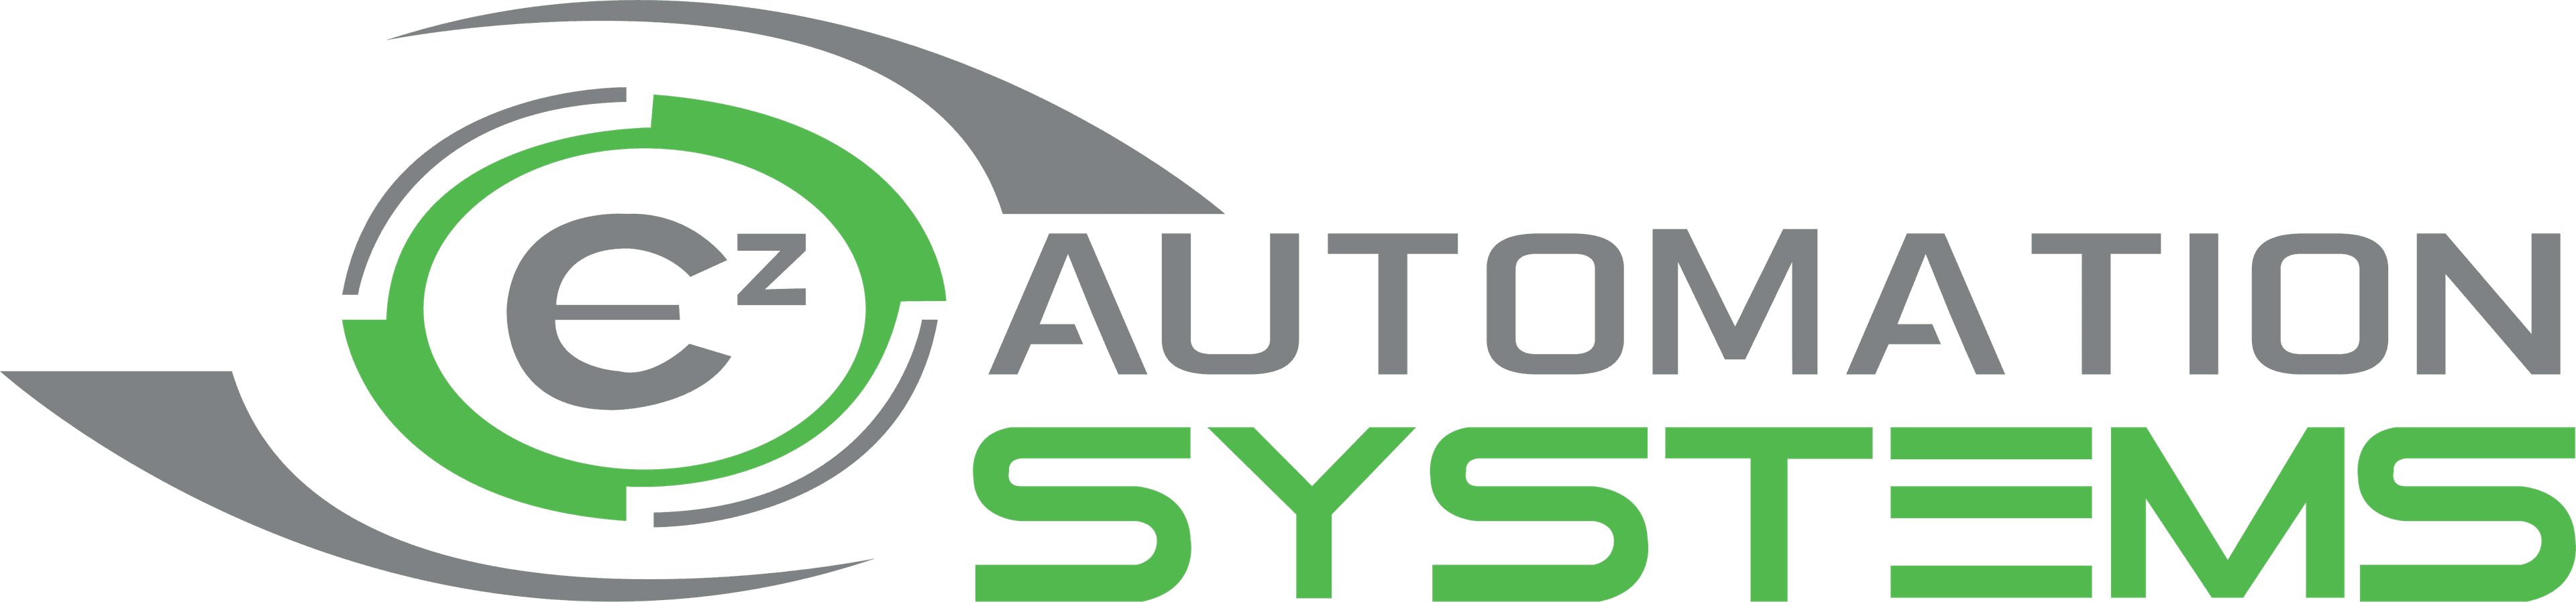 EZ Automation Systems, LLC